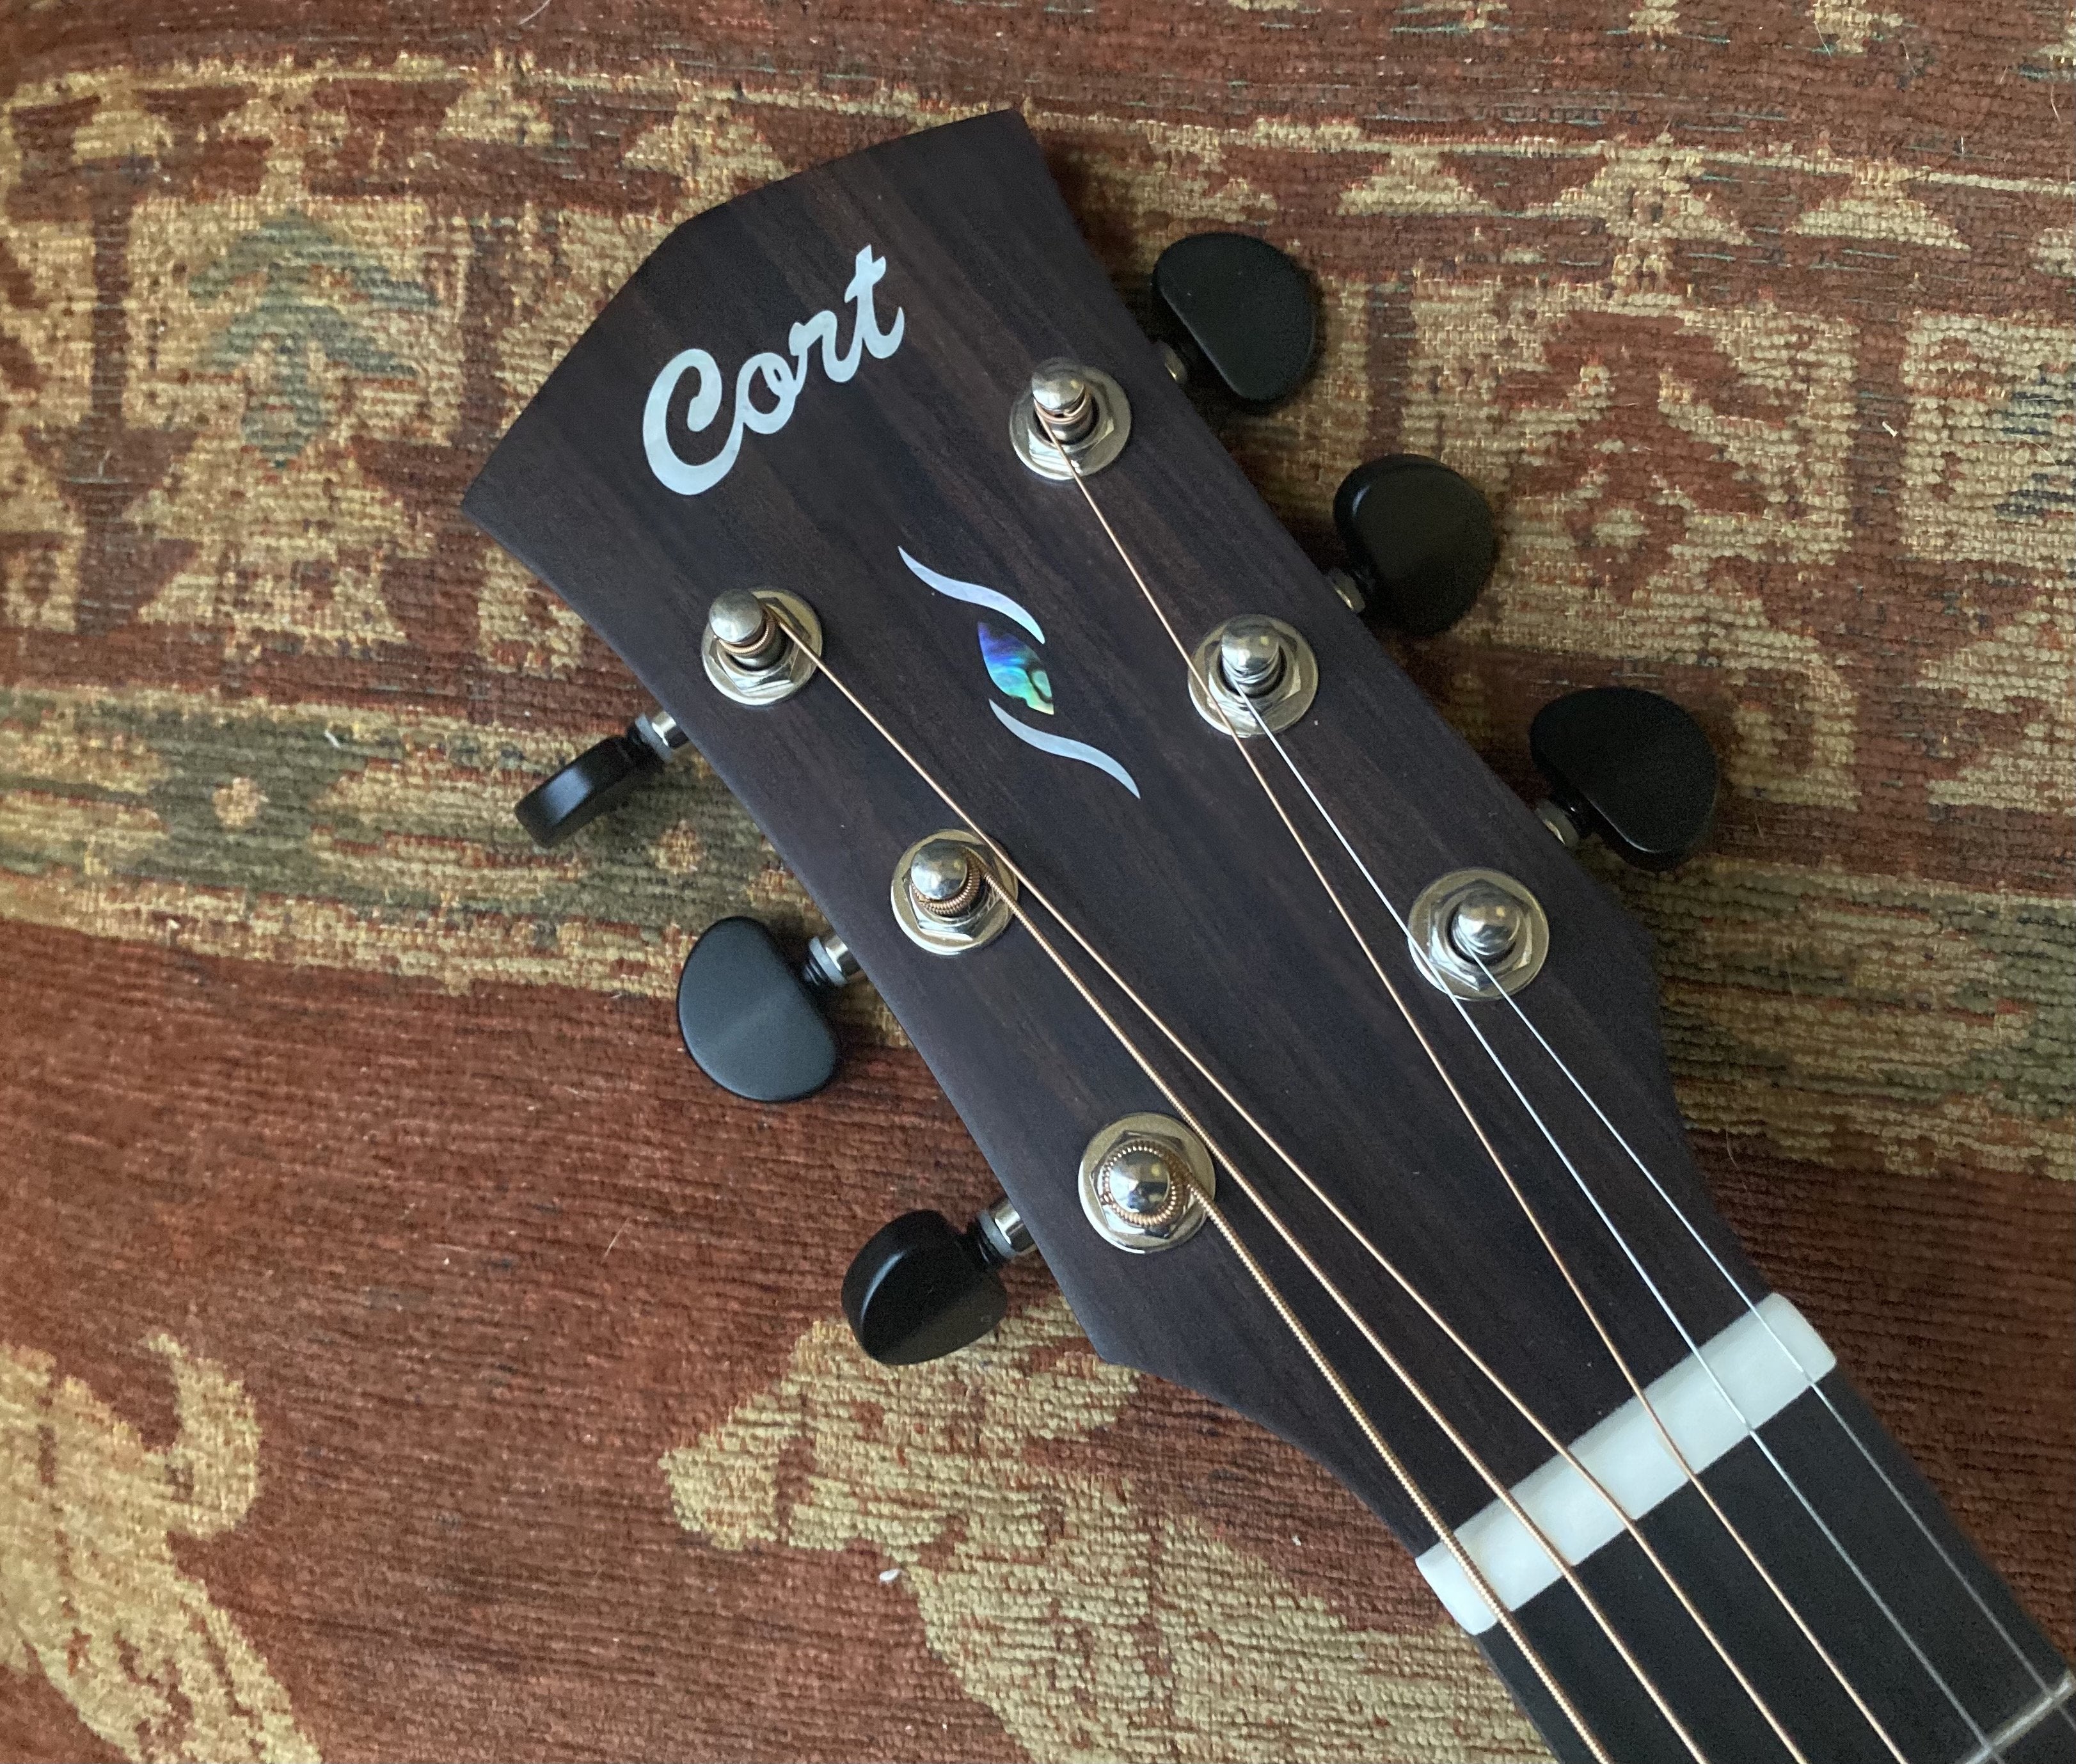 Cort Core-OC Mahogany All Solid Wood Electro Acoustic Guitar, Electro Acoustic Guitar for sale at Richards Guitars.